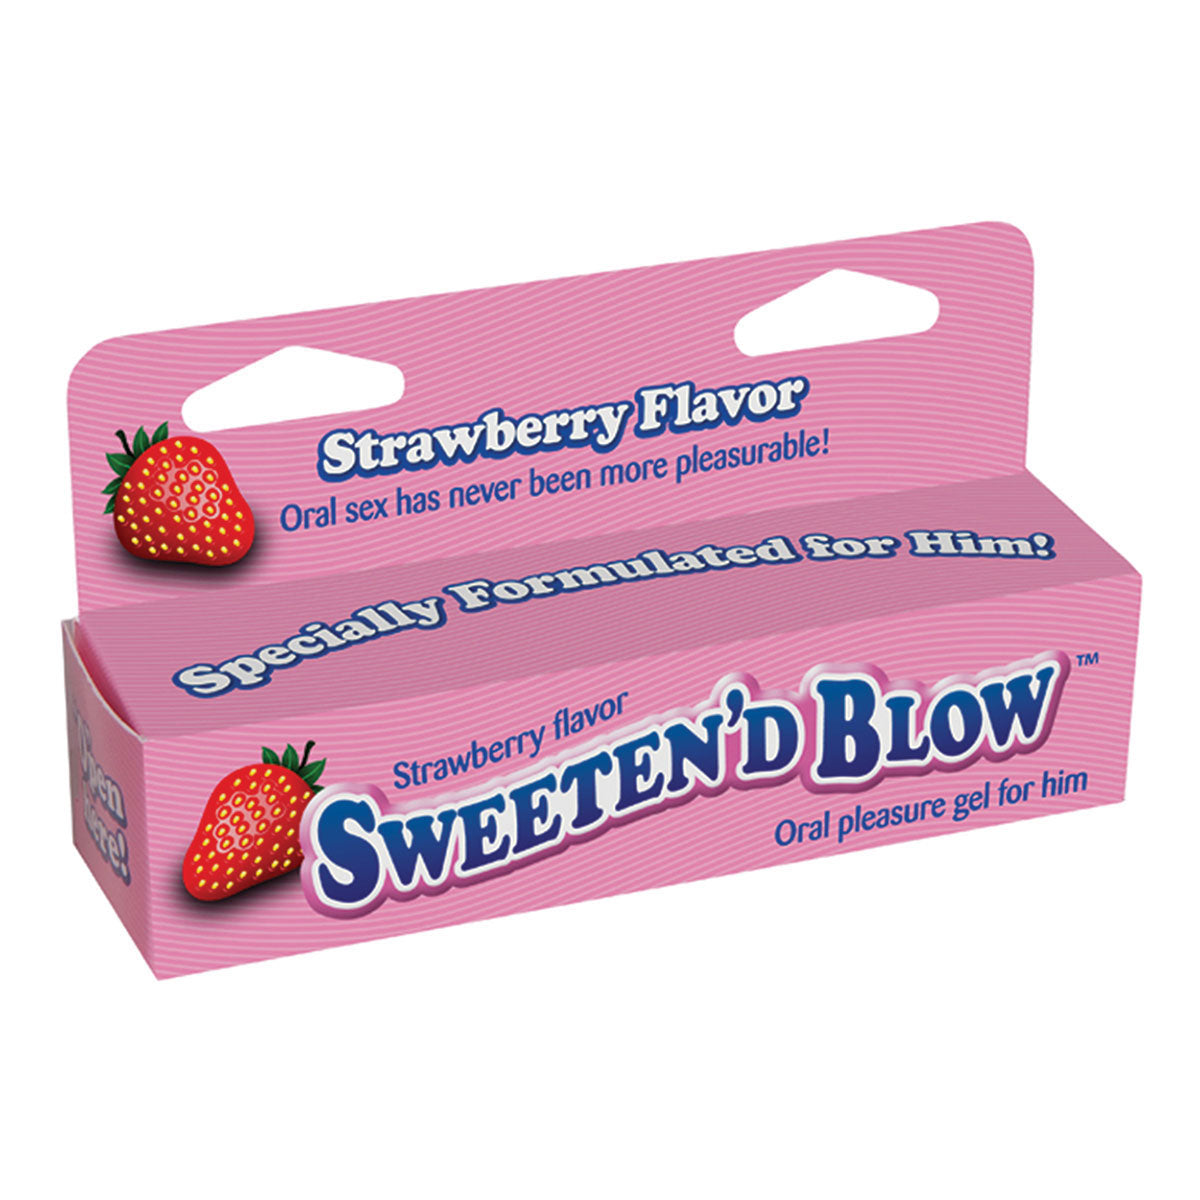 Sweeten'd Blow Oral Pleasure Gel - 1.5 oz. - Assorted Flavors